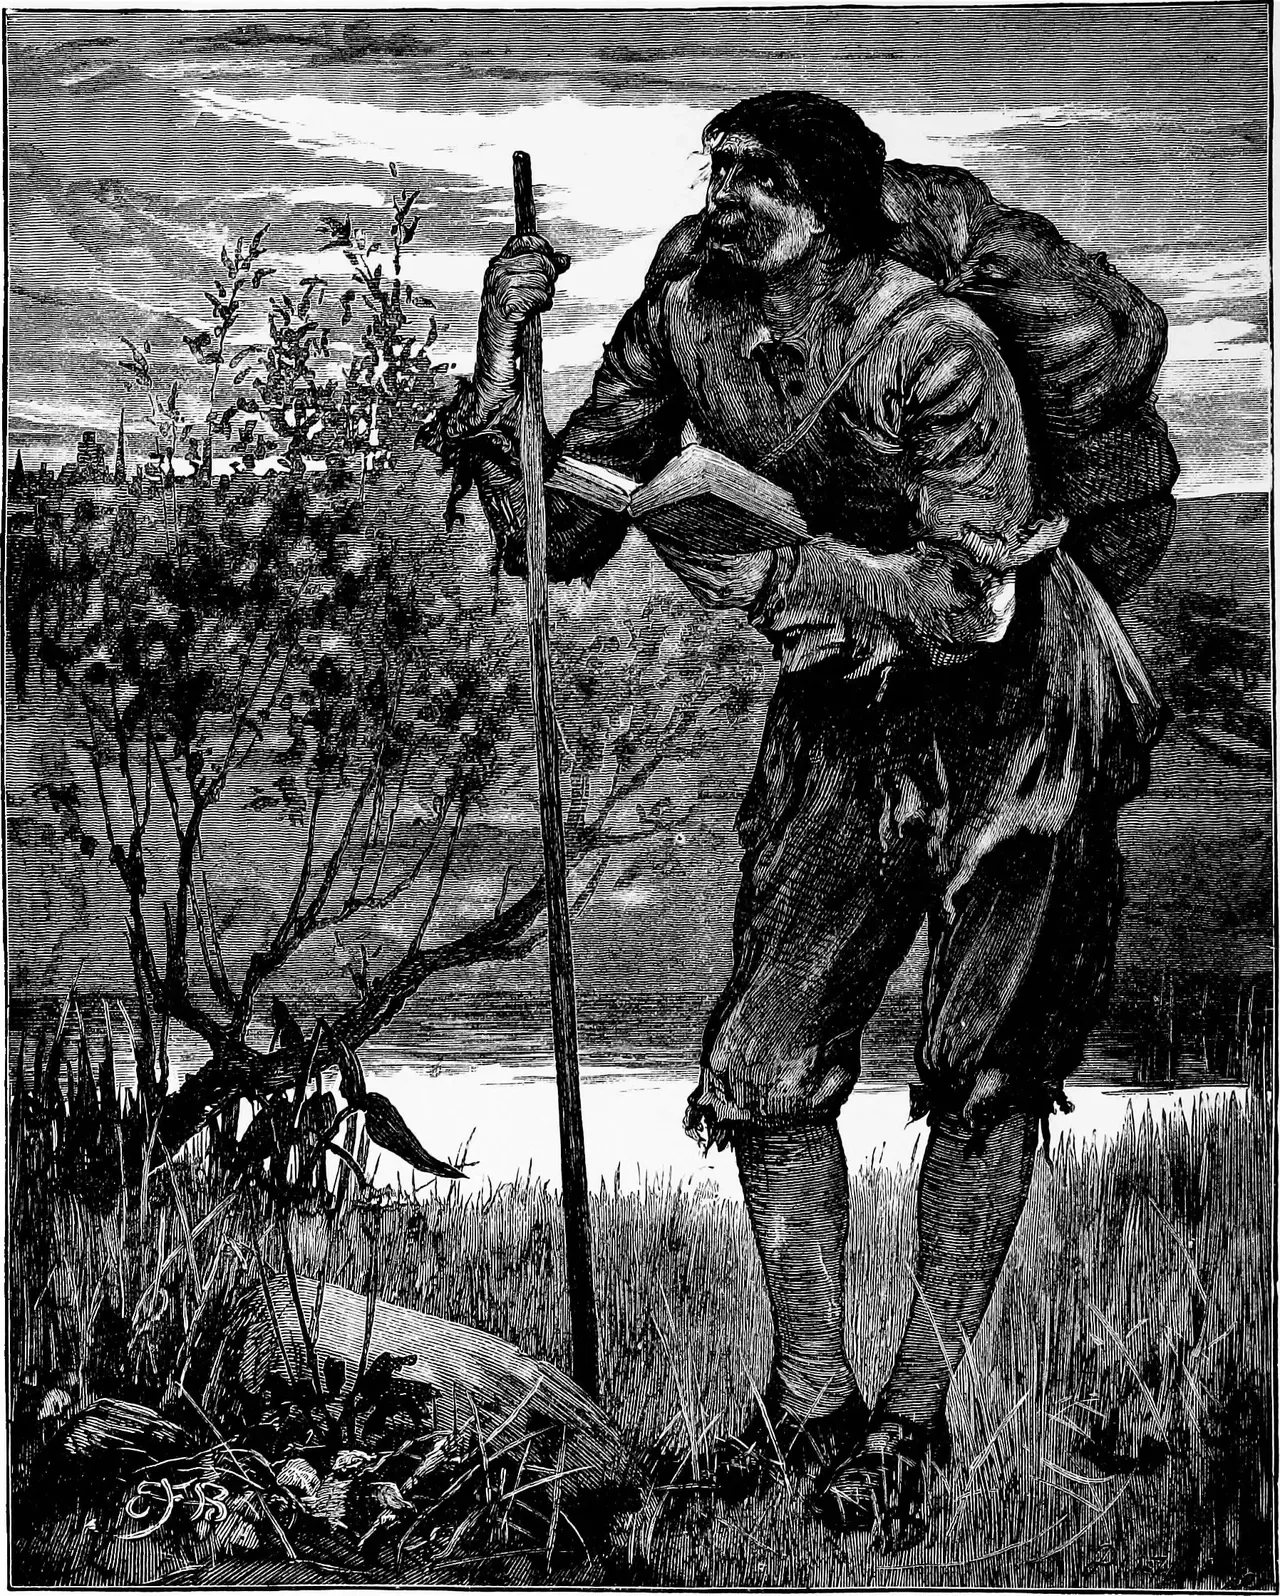 Christian and his burden, from Pilgrim's Progress